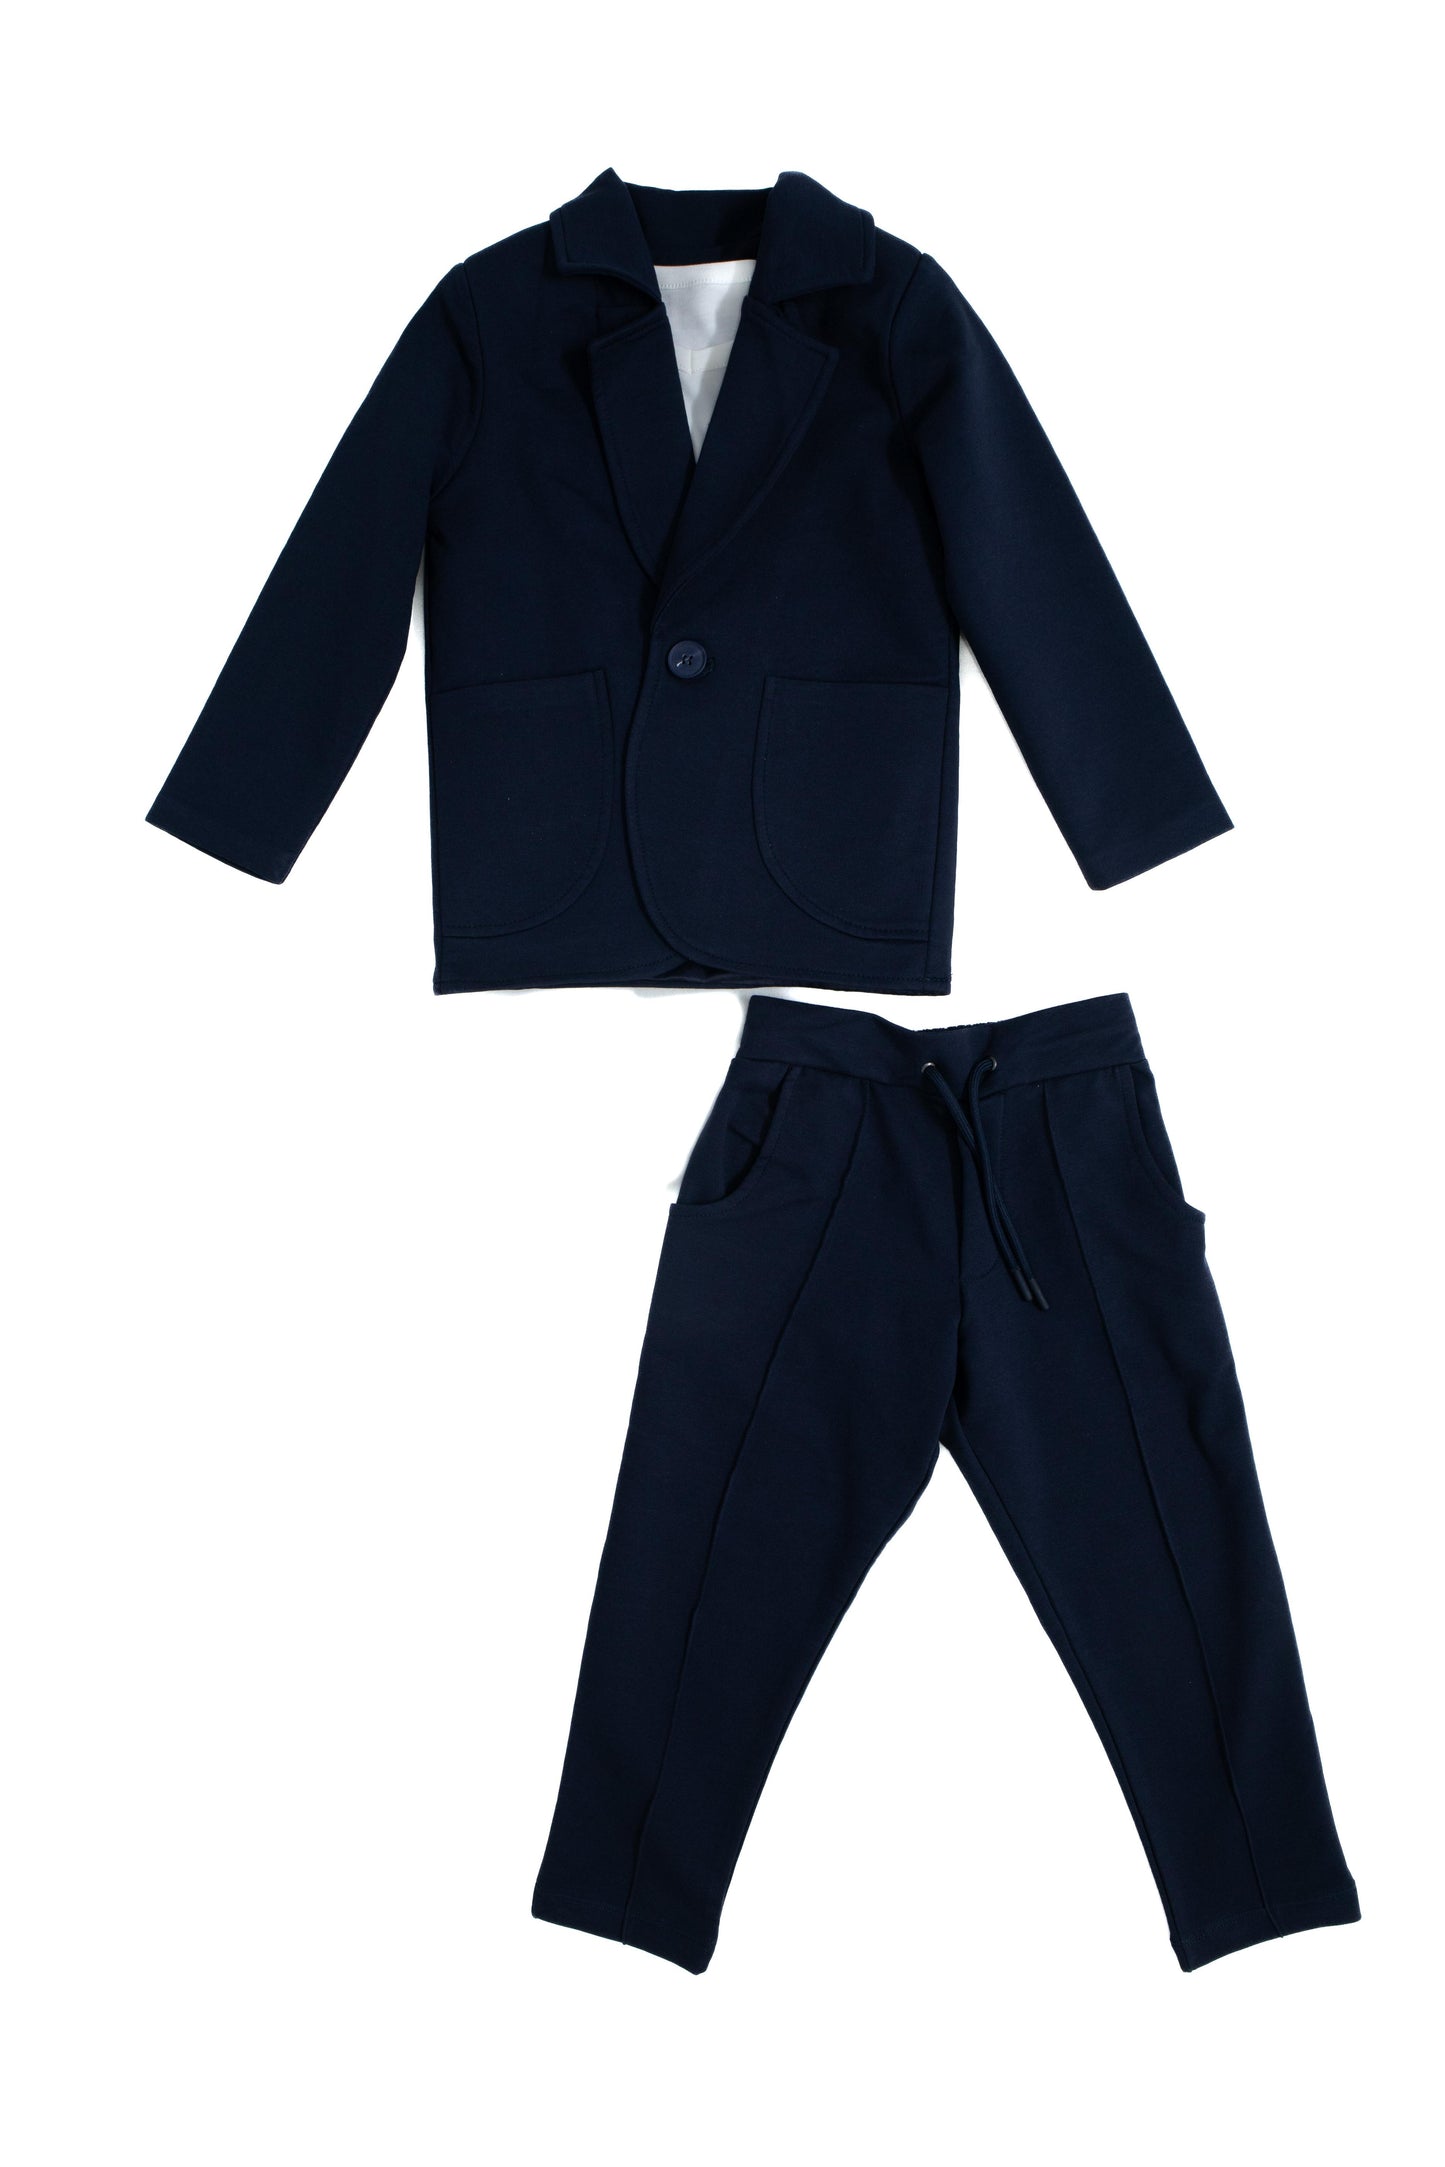 Children's Special Day Lycra Cotton 3-Piece Suit